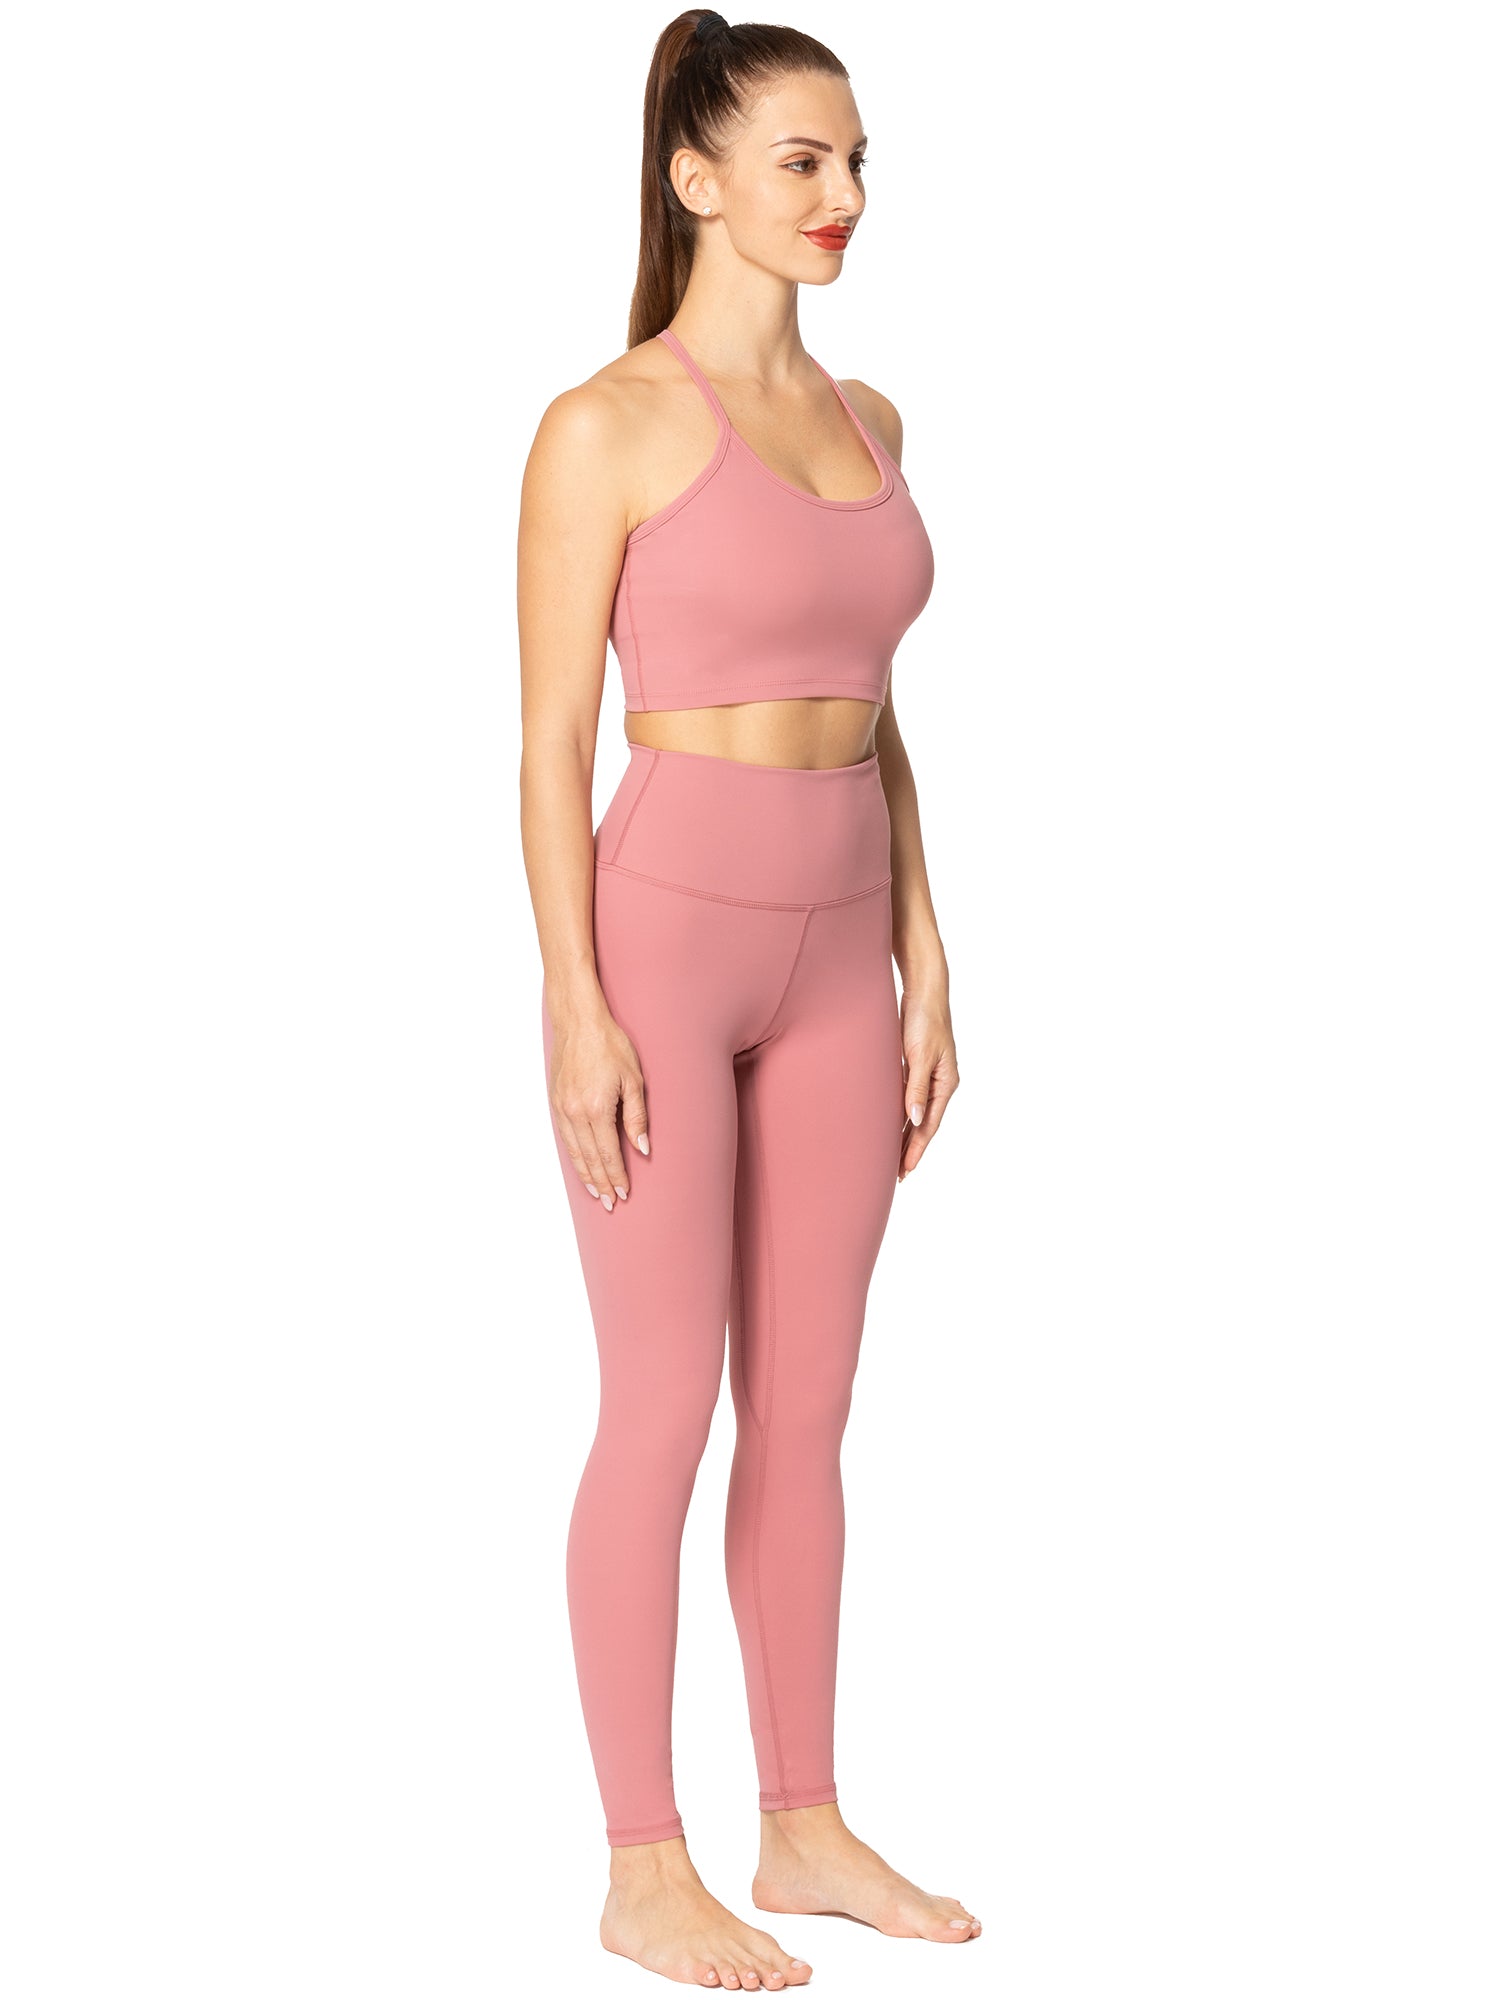 .com .com: Sunzel Workout Leggings for Women, Squat Proof High  Waisted Yoga Pants 4 Way Stretch, Buttery Soft Green Camo: Clothing